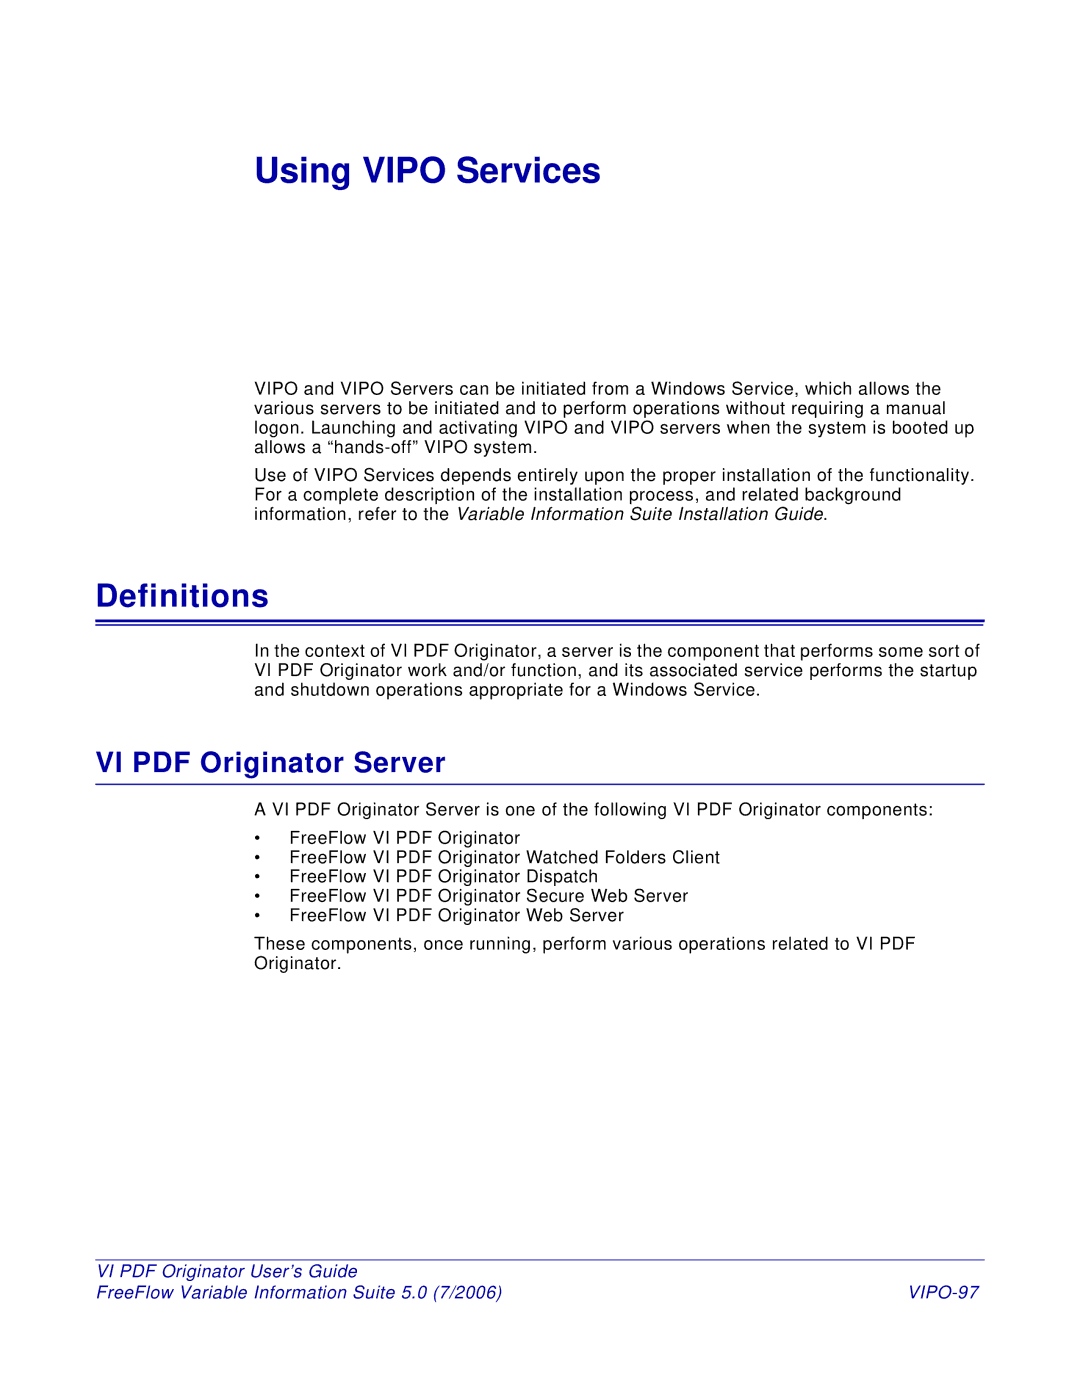 Xerox 5 manual Definitions, VIPO-97 